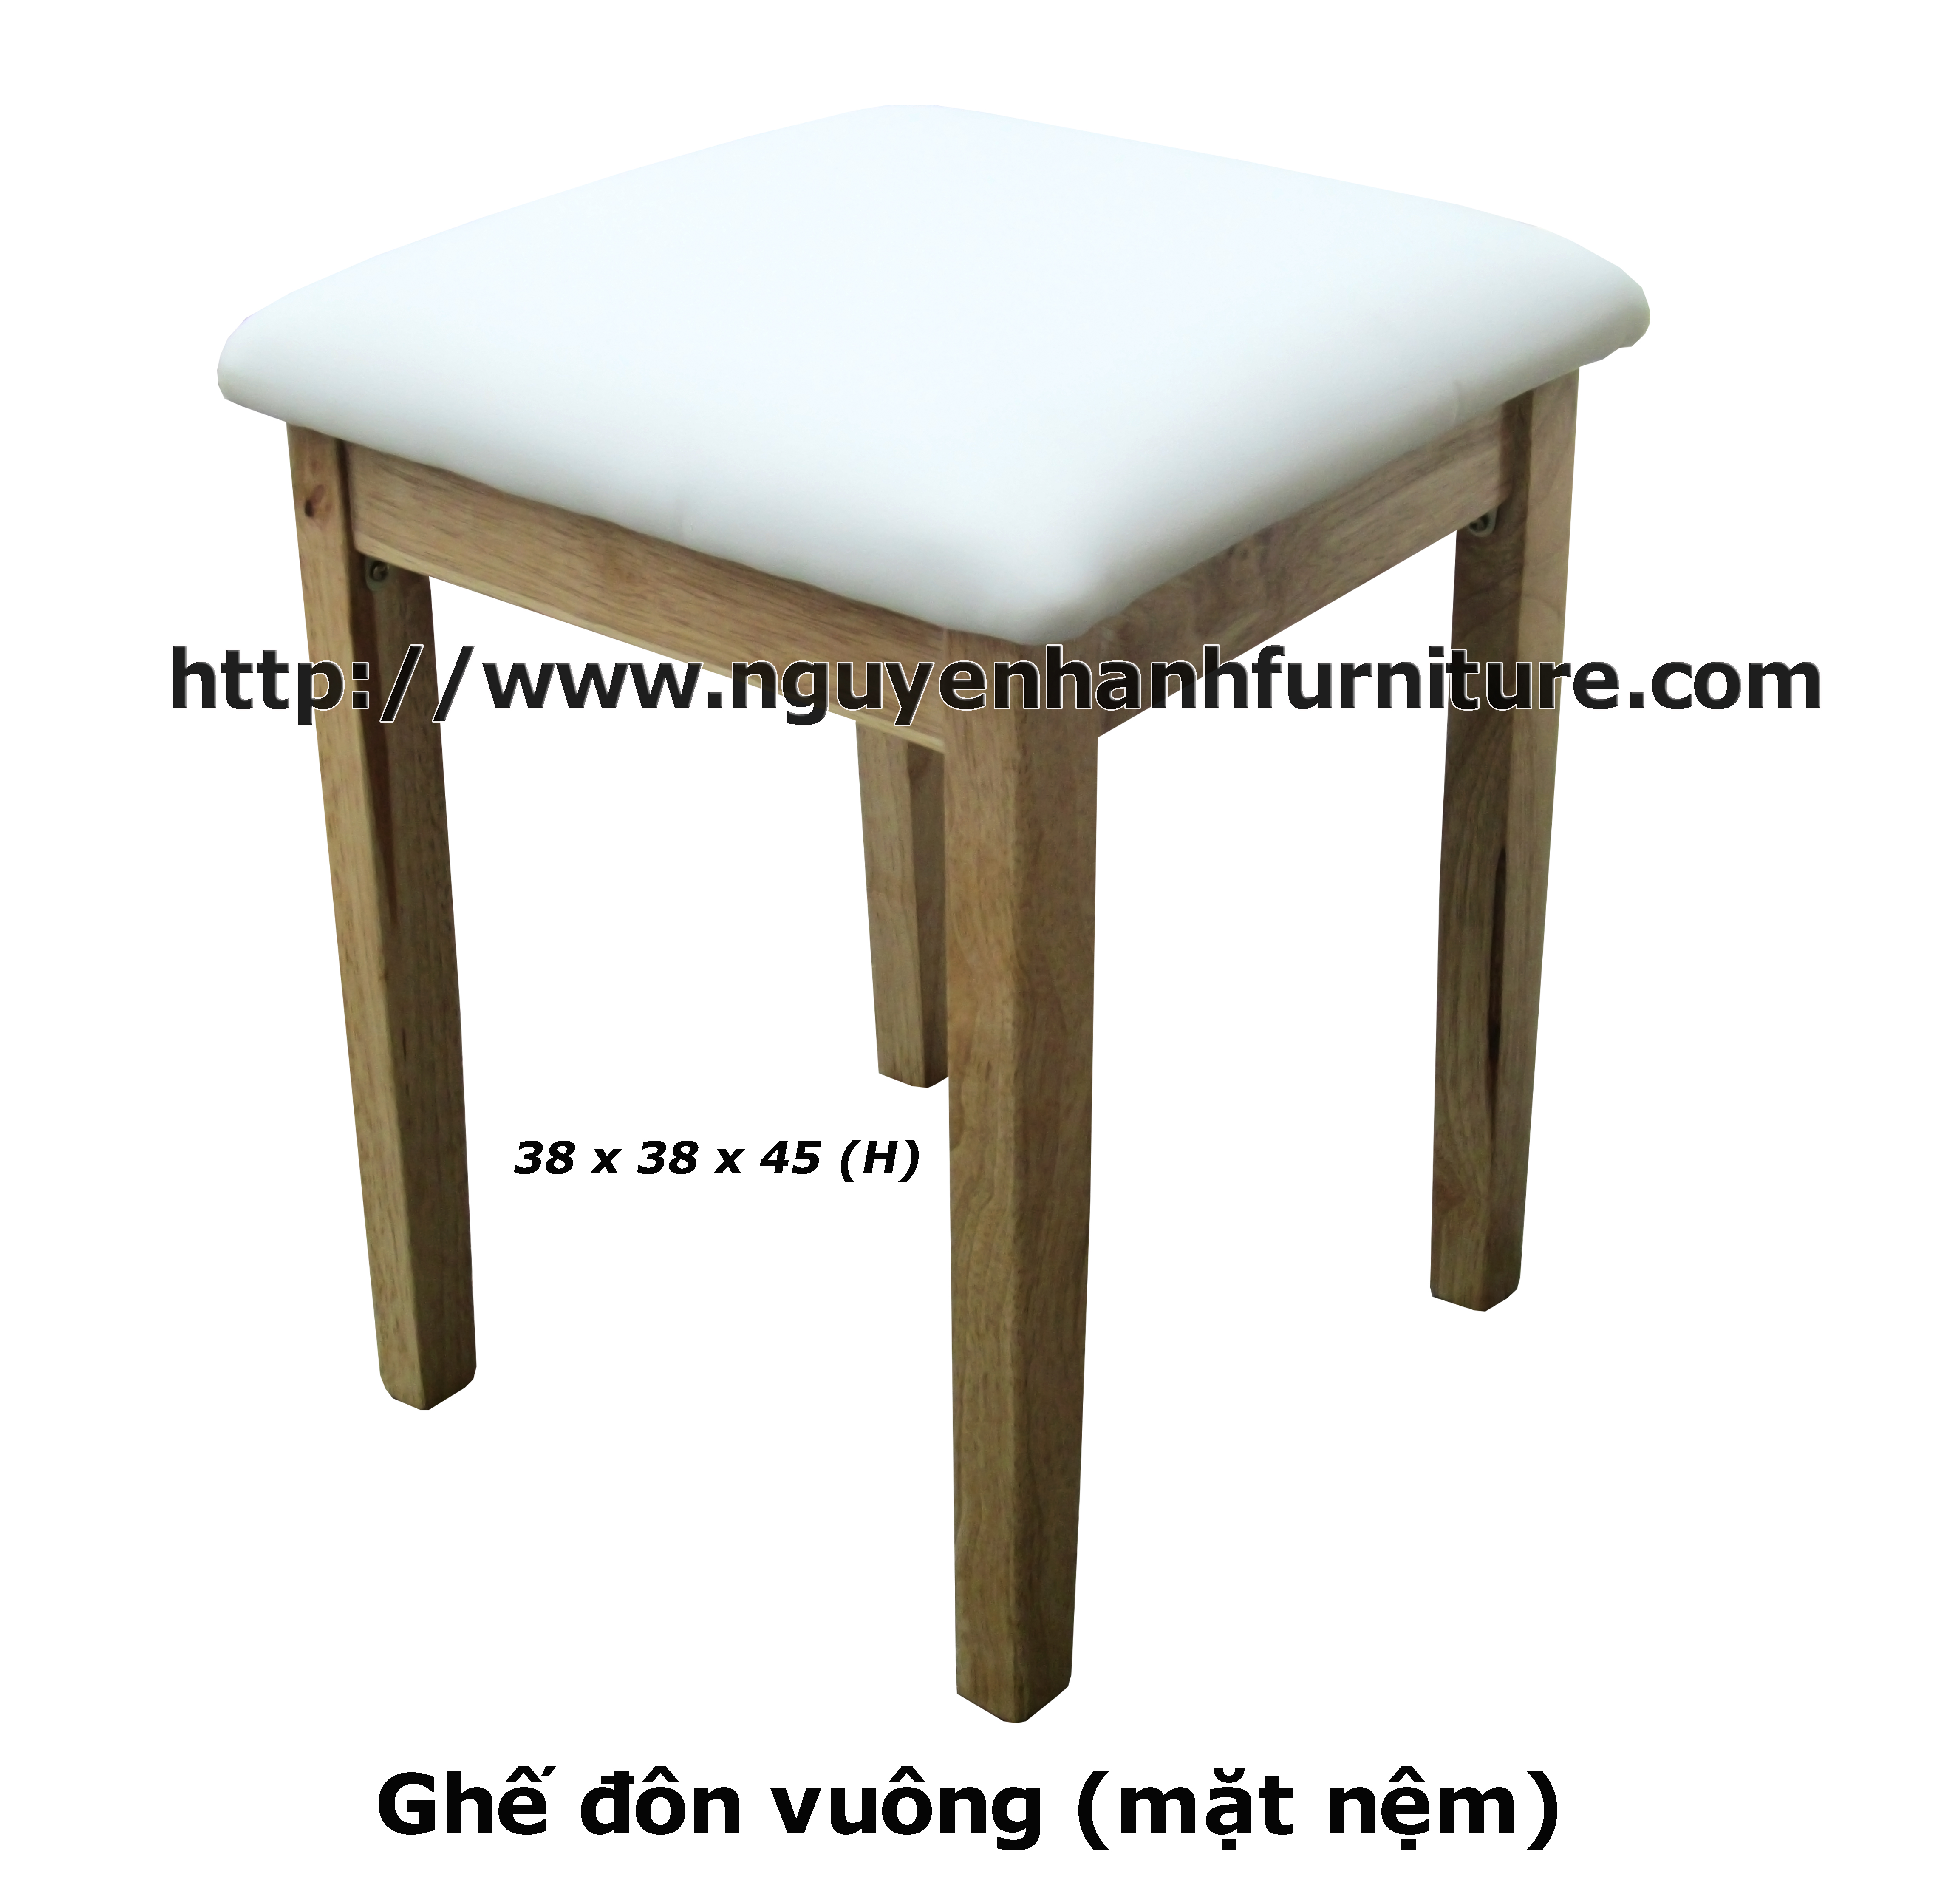 Name product: square chair (cream cushion) - Dimensions: 38 x 38 x 45 (H) - Description: Wood natural rubber